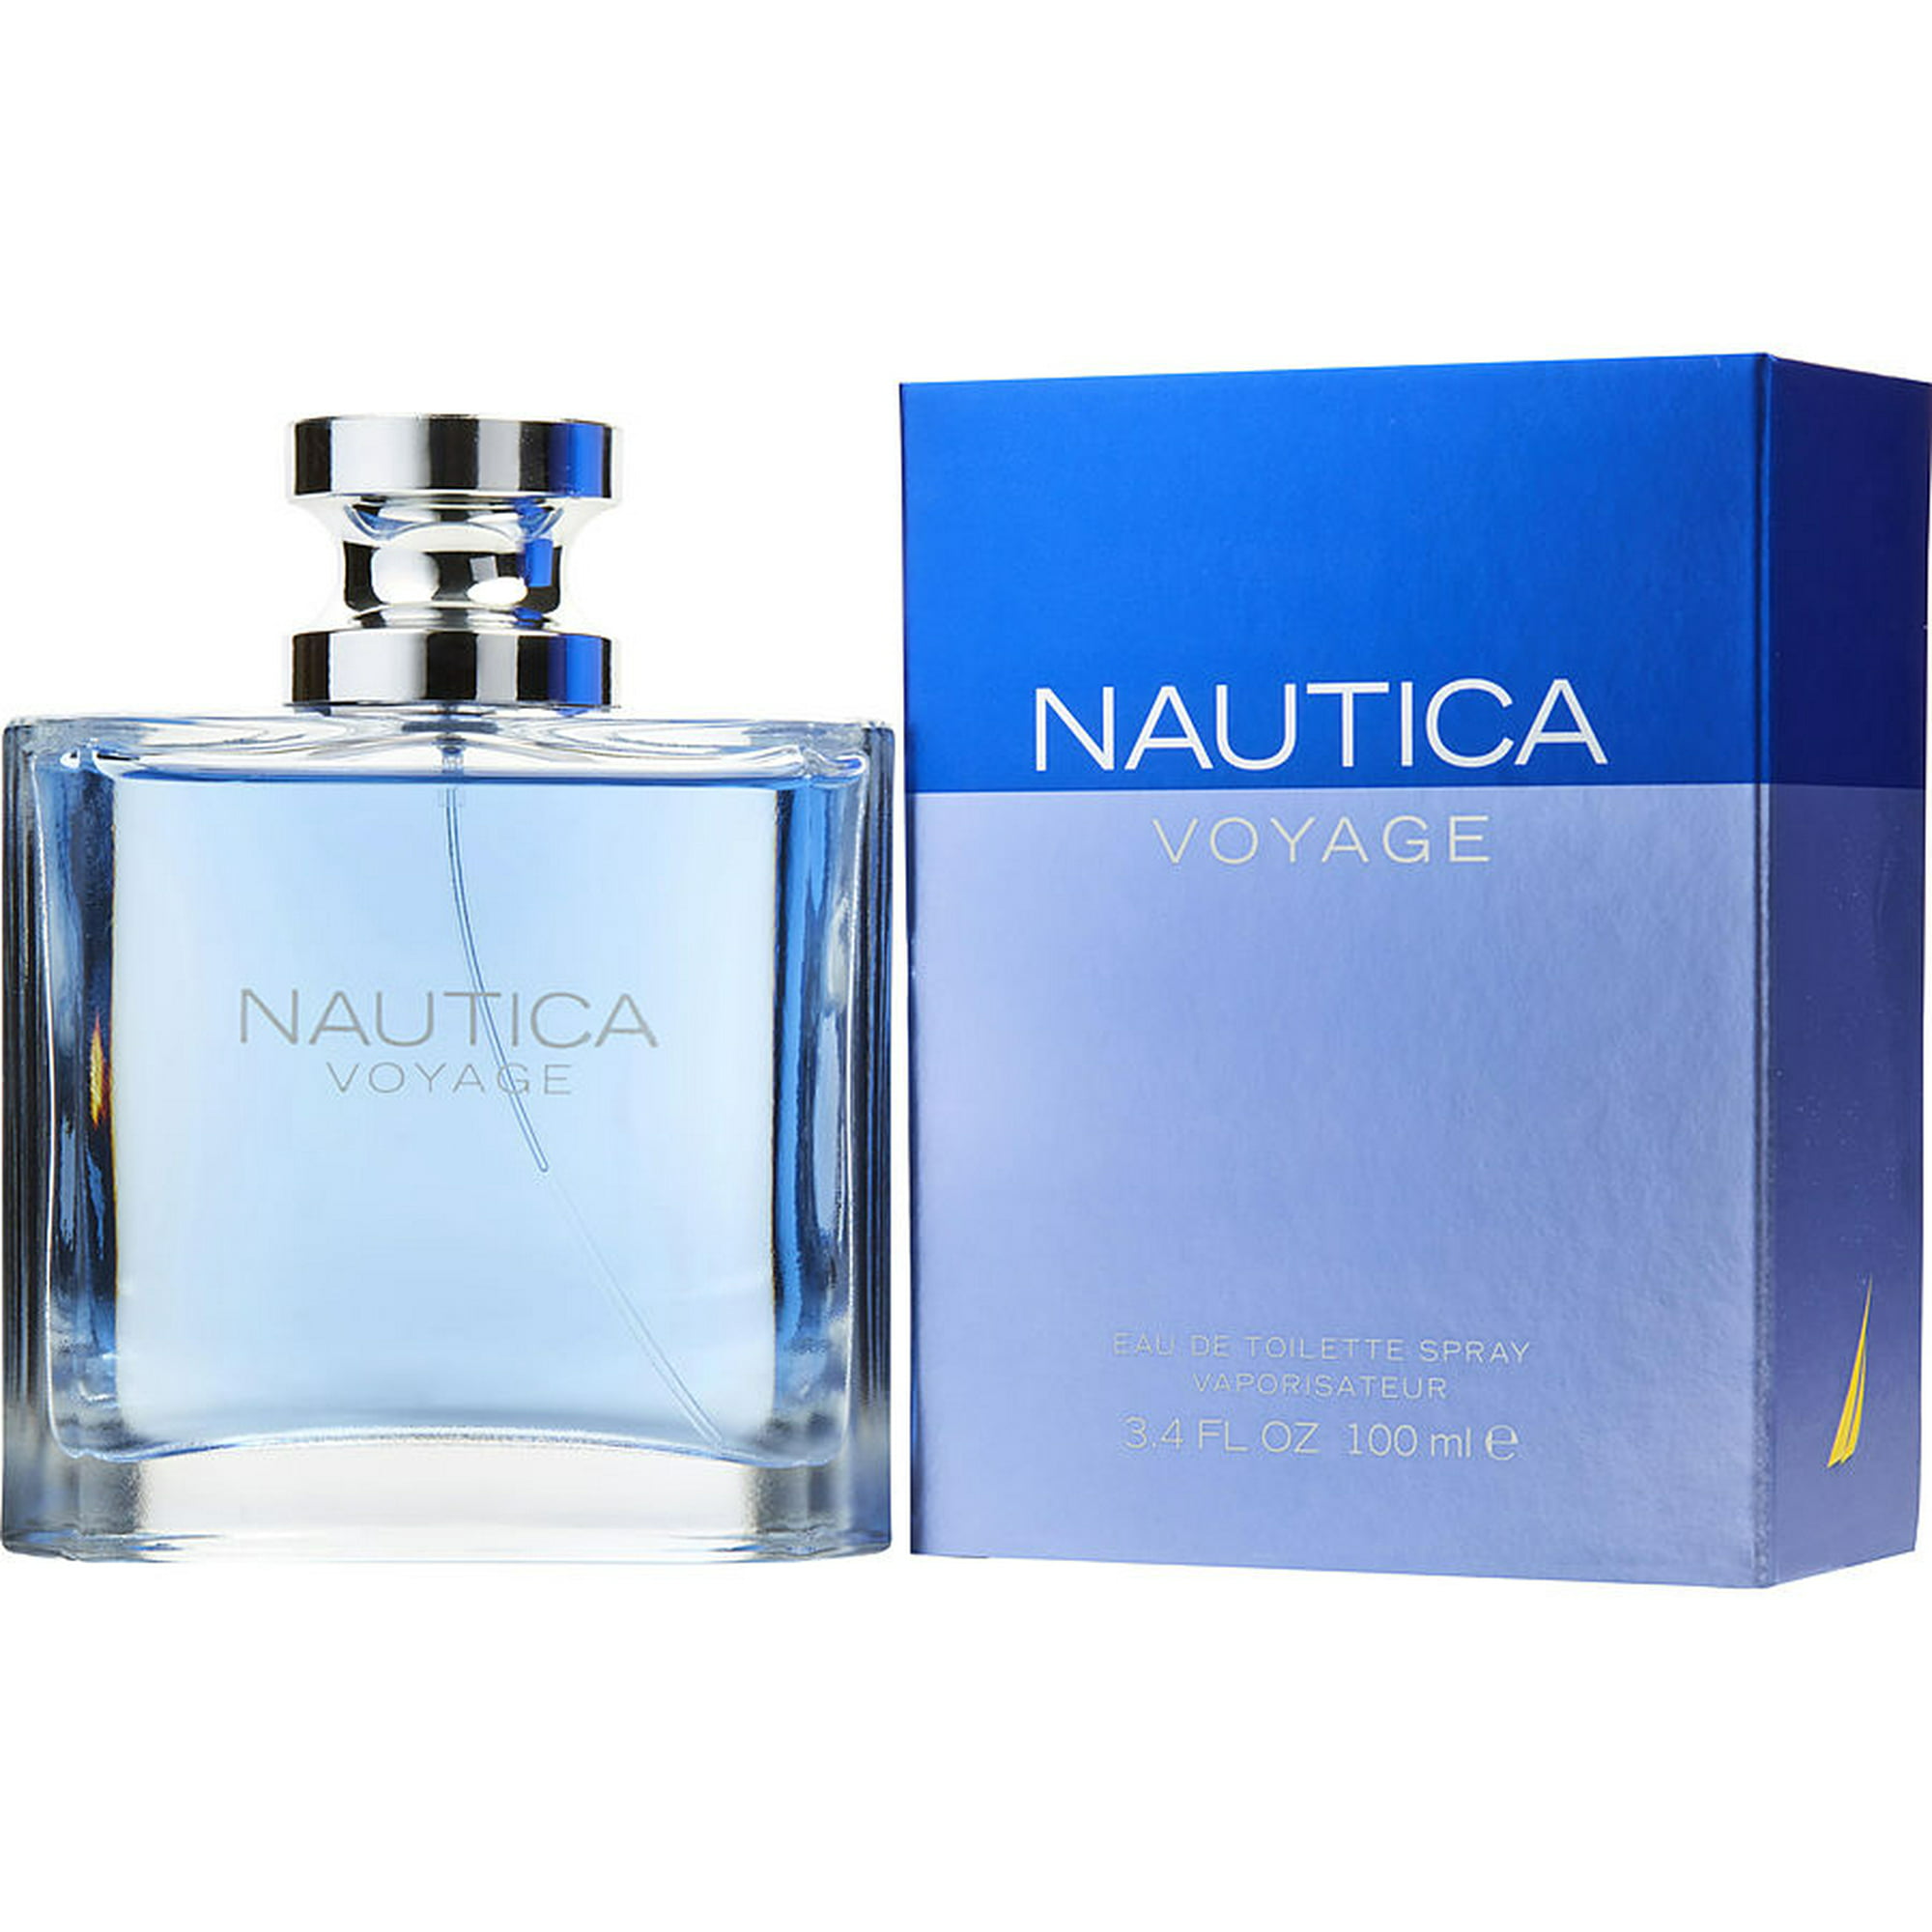 nautica voyage perfume buy online